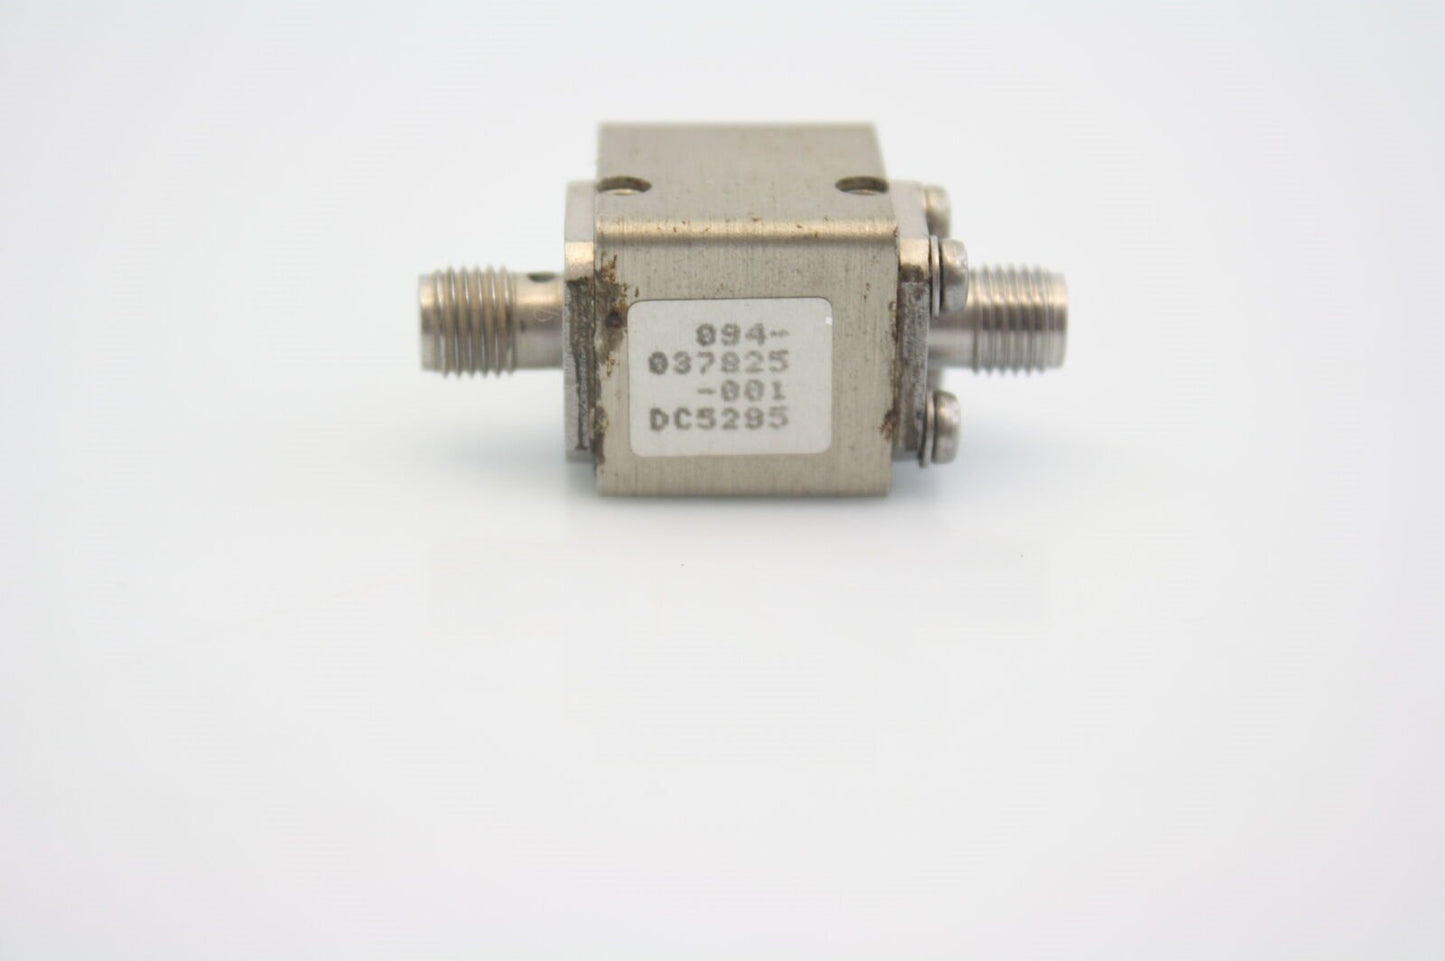 Harris Microwave RF Isolator 10.5-13.5GHz 20dB Isolation 0.8dB loss TESTED